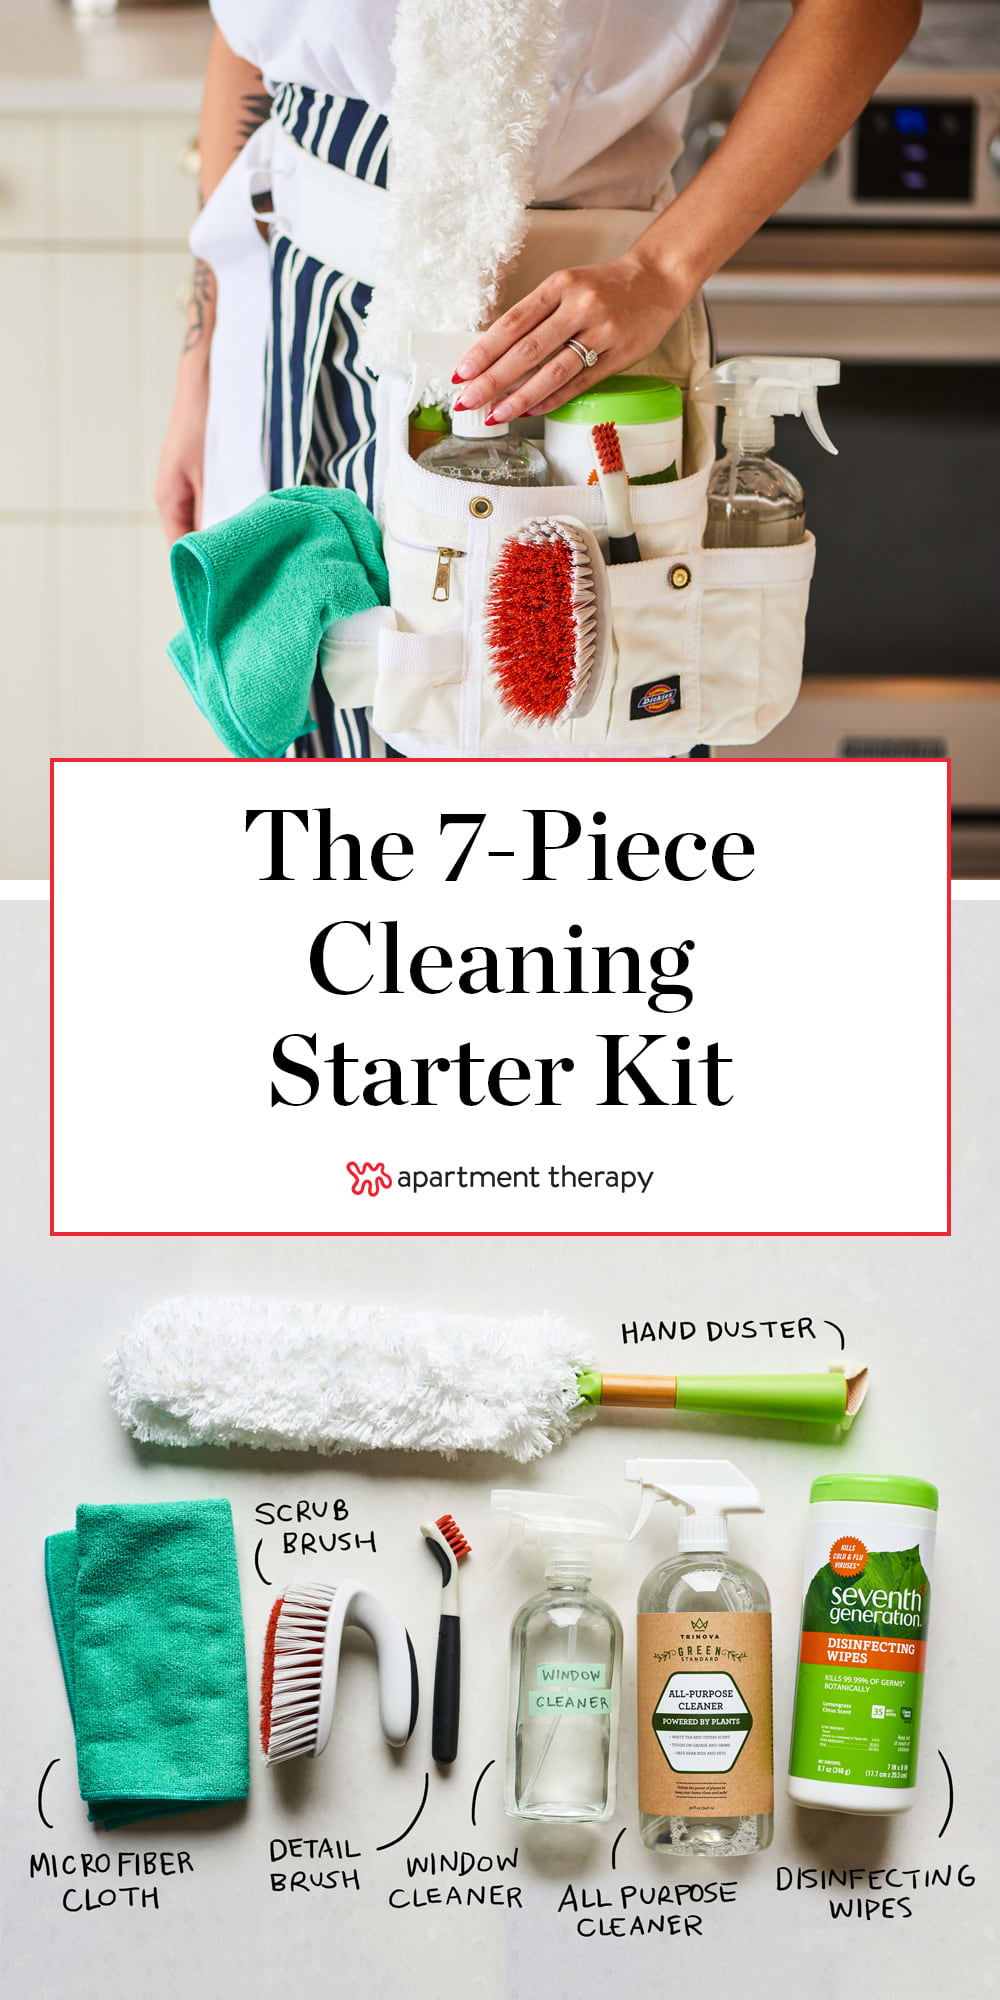 https://cdn.apartmenttherapy.info/image/upload/v1570553020/at/living/cleaning-starter-kit-essentials.jpg